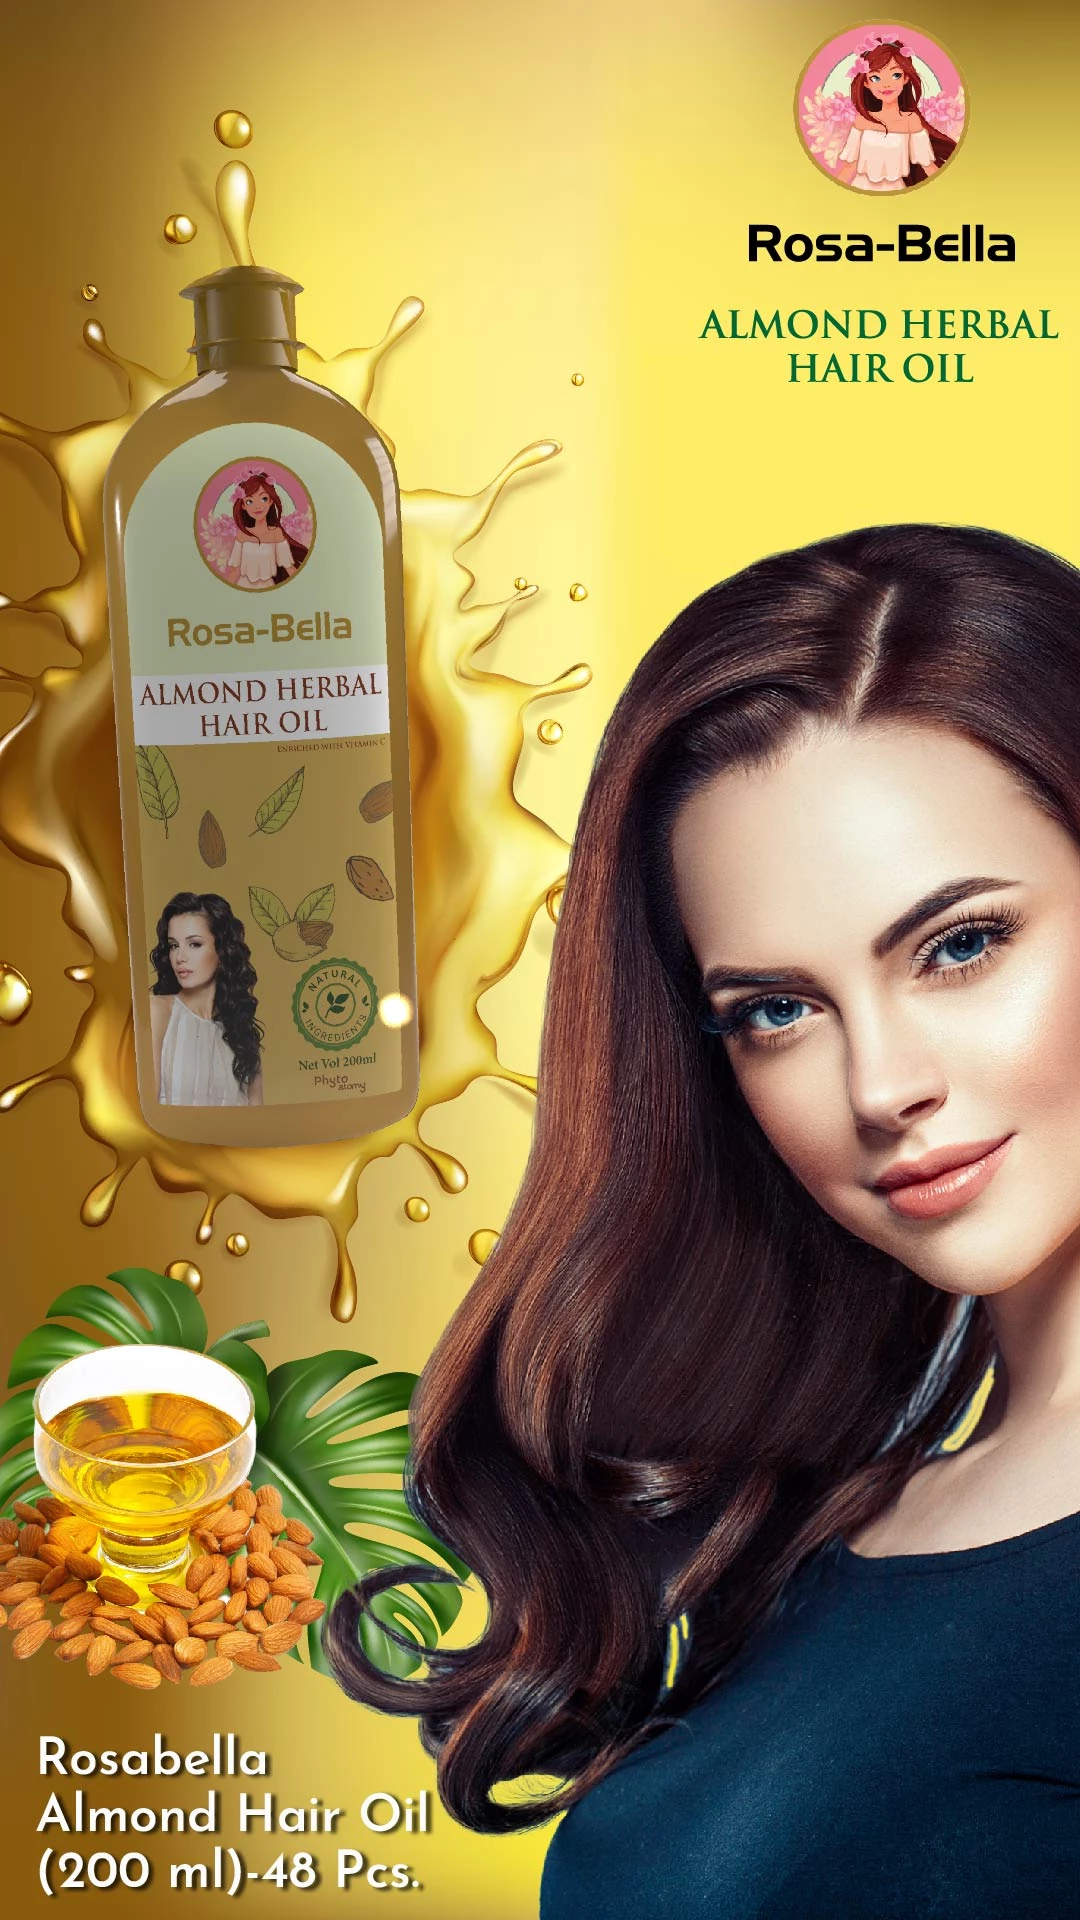 RBV B2B Rosabella Almond Hair Oil (200 ml)-24 Pcs.